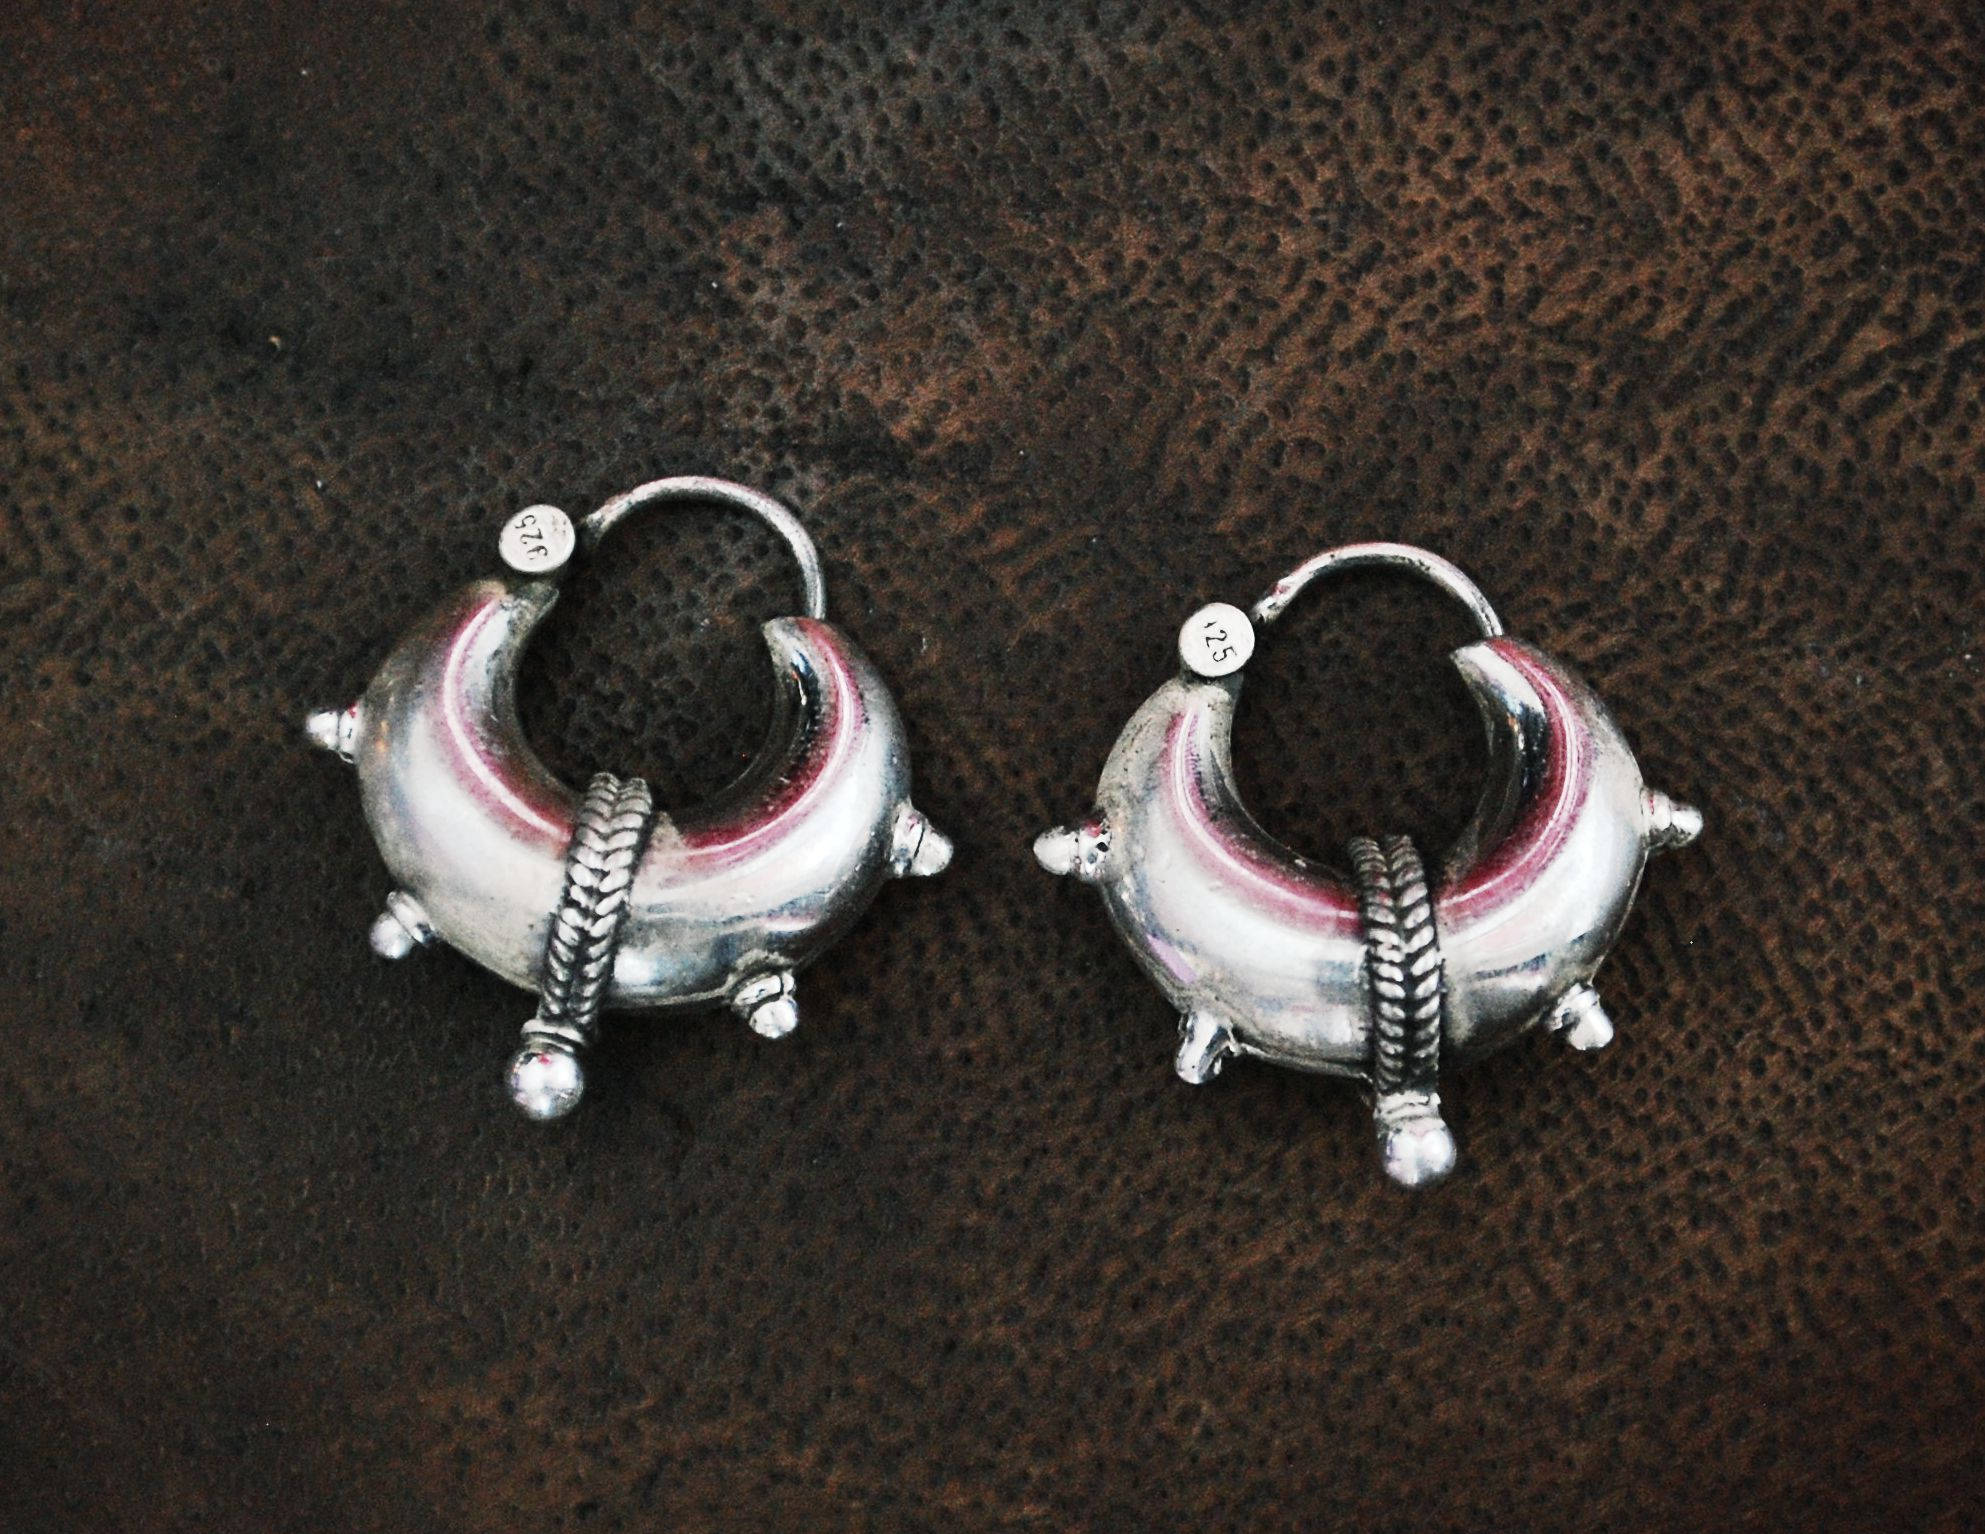 Rajasthani Earrings - Small - Indian Jewelry - Rajasthan Jewelry - Rajasthan Earrings - Gypsy Jewelry - Gypsy Earrings